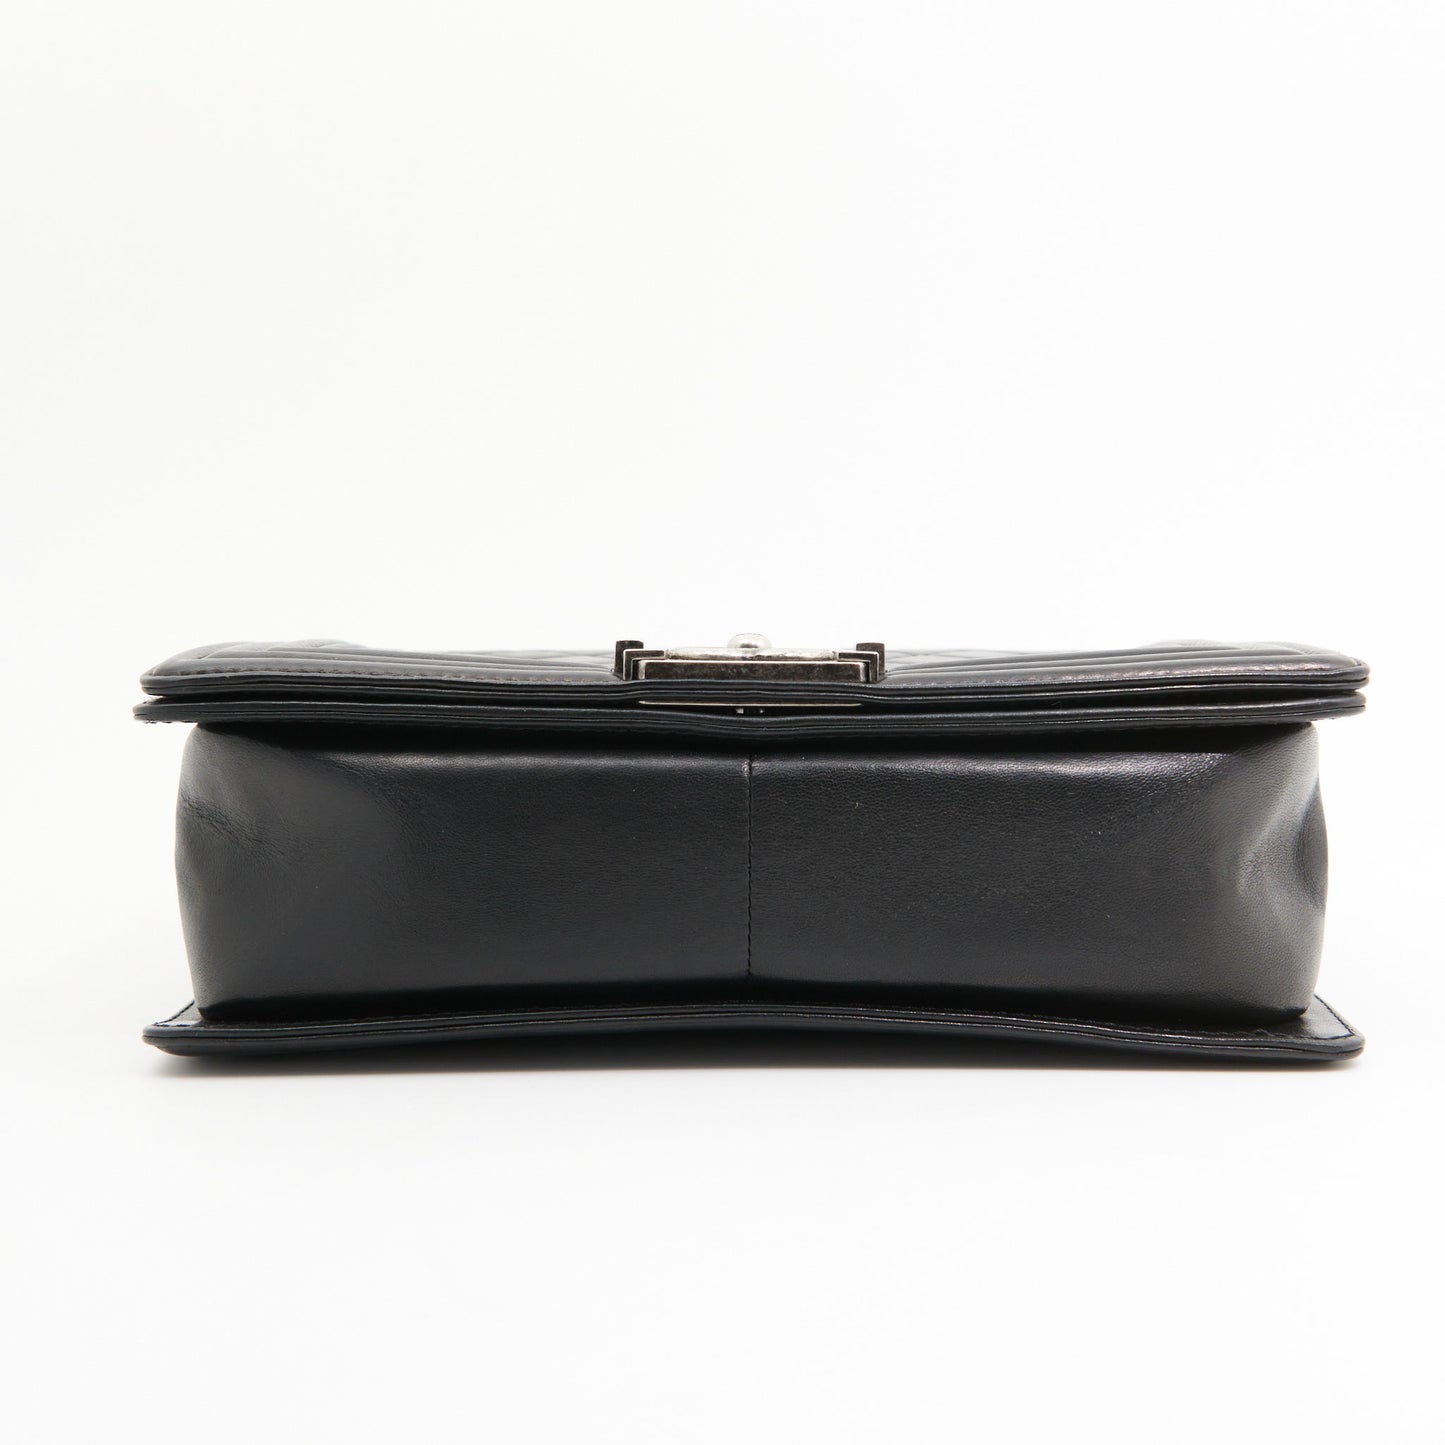 Chanel Lambskin Boy Bag Medium (Recolour) in Black SHW